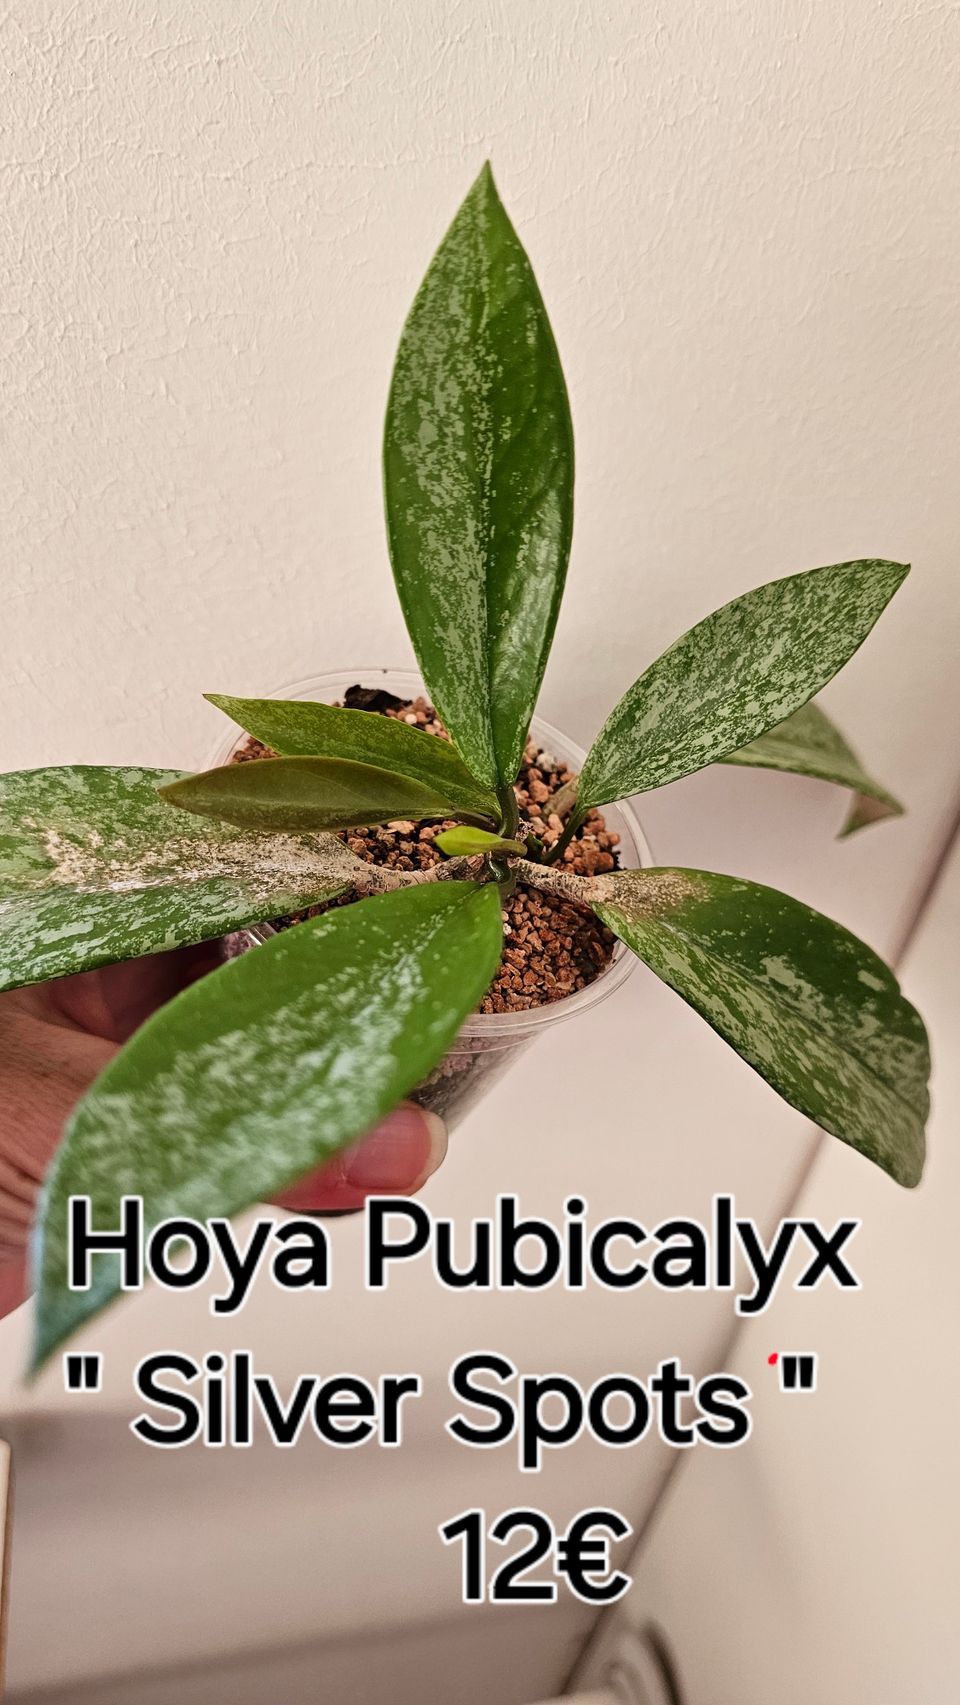 Hoya pubicalyx " Silver Spots " hp.12 eurolla